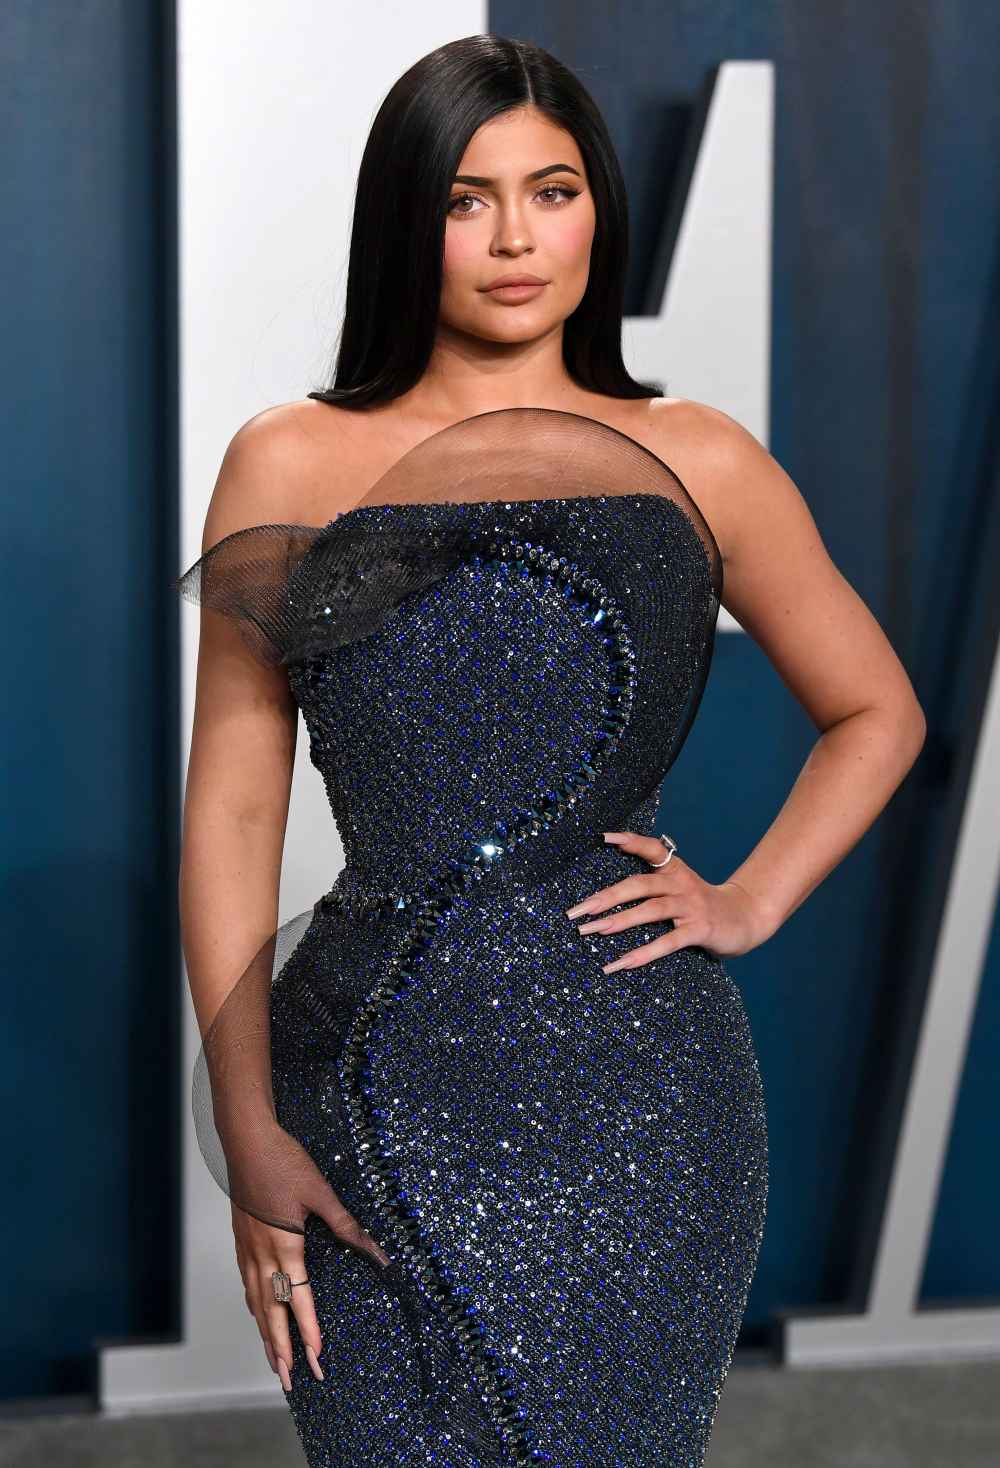 Kylie Jenner Tops Forbes Richest Celebrity List After Billionaire Drama